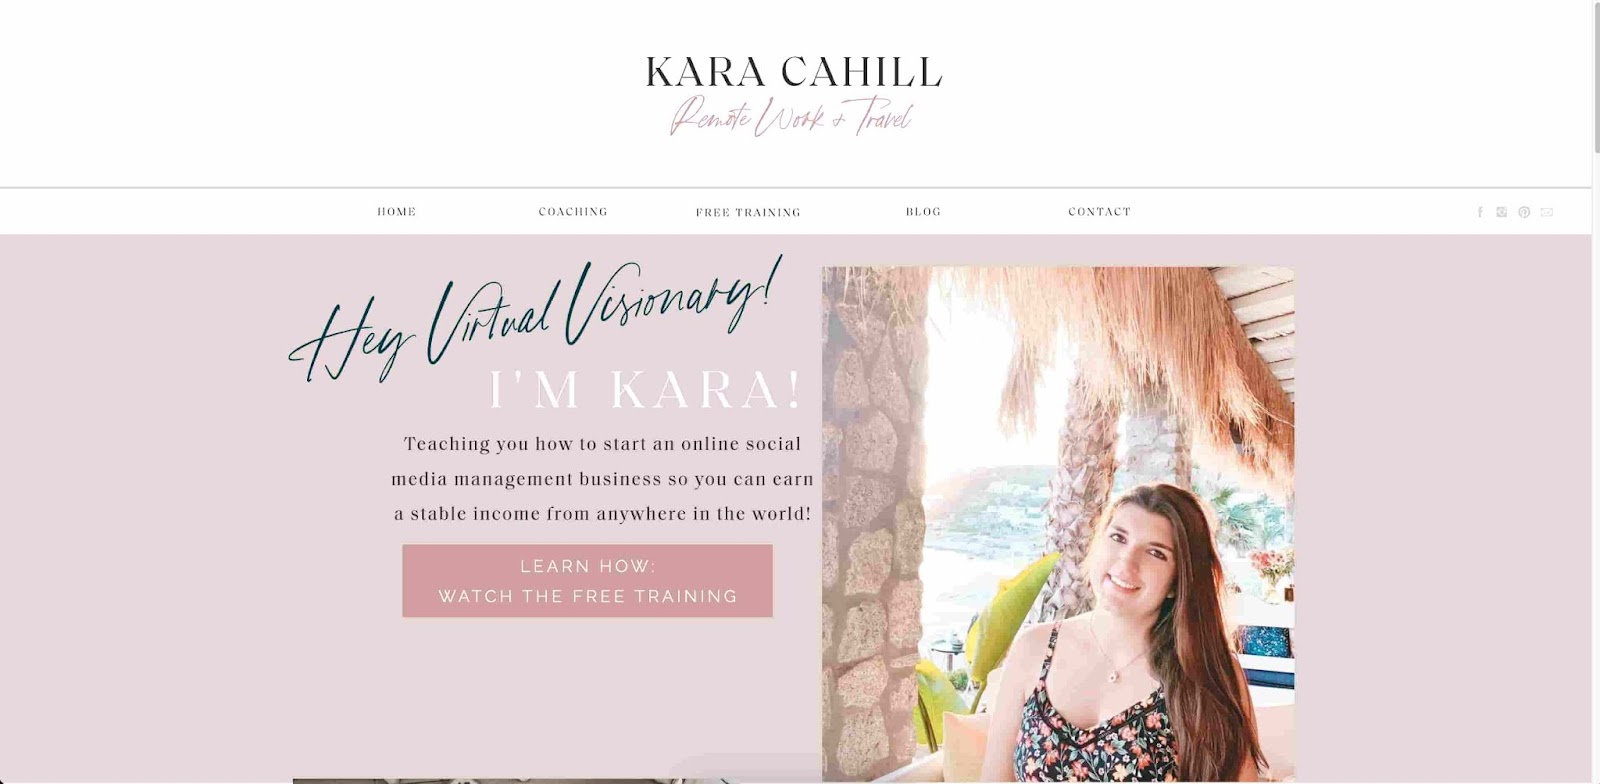 kara cahill virtual assistant website example for social media management